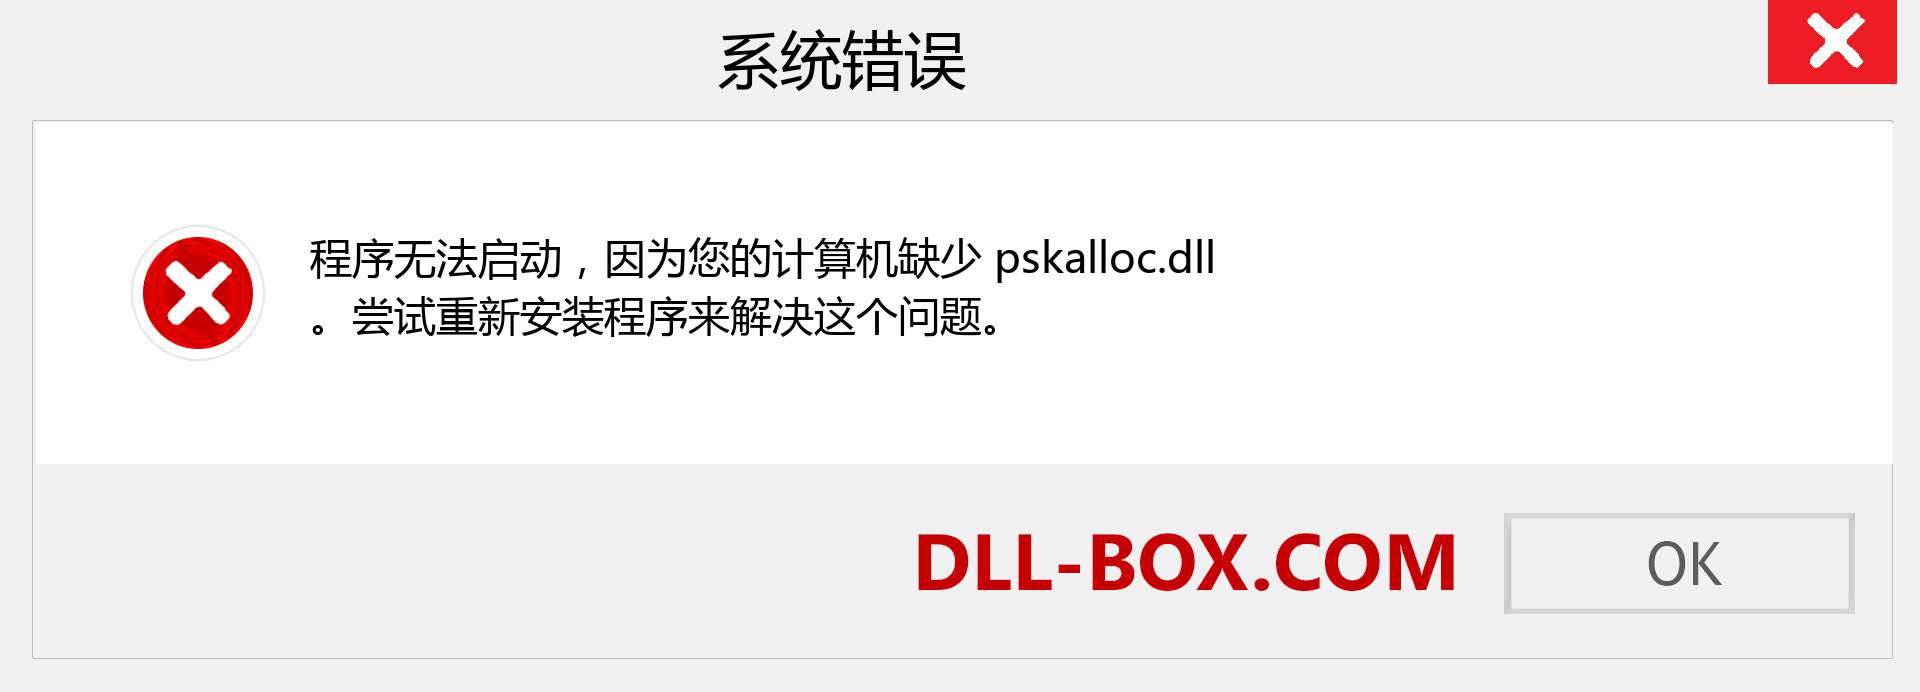 pskalloc.dll 文件丢失？。 适用于 Windows 7、8、10 的下载 - 修复 Windows、照片、图像上的 pskalloc dll 丢失错误